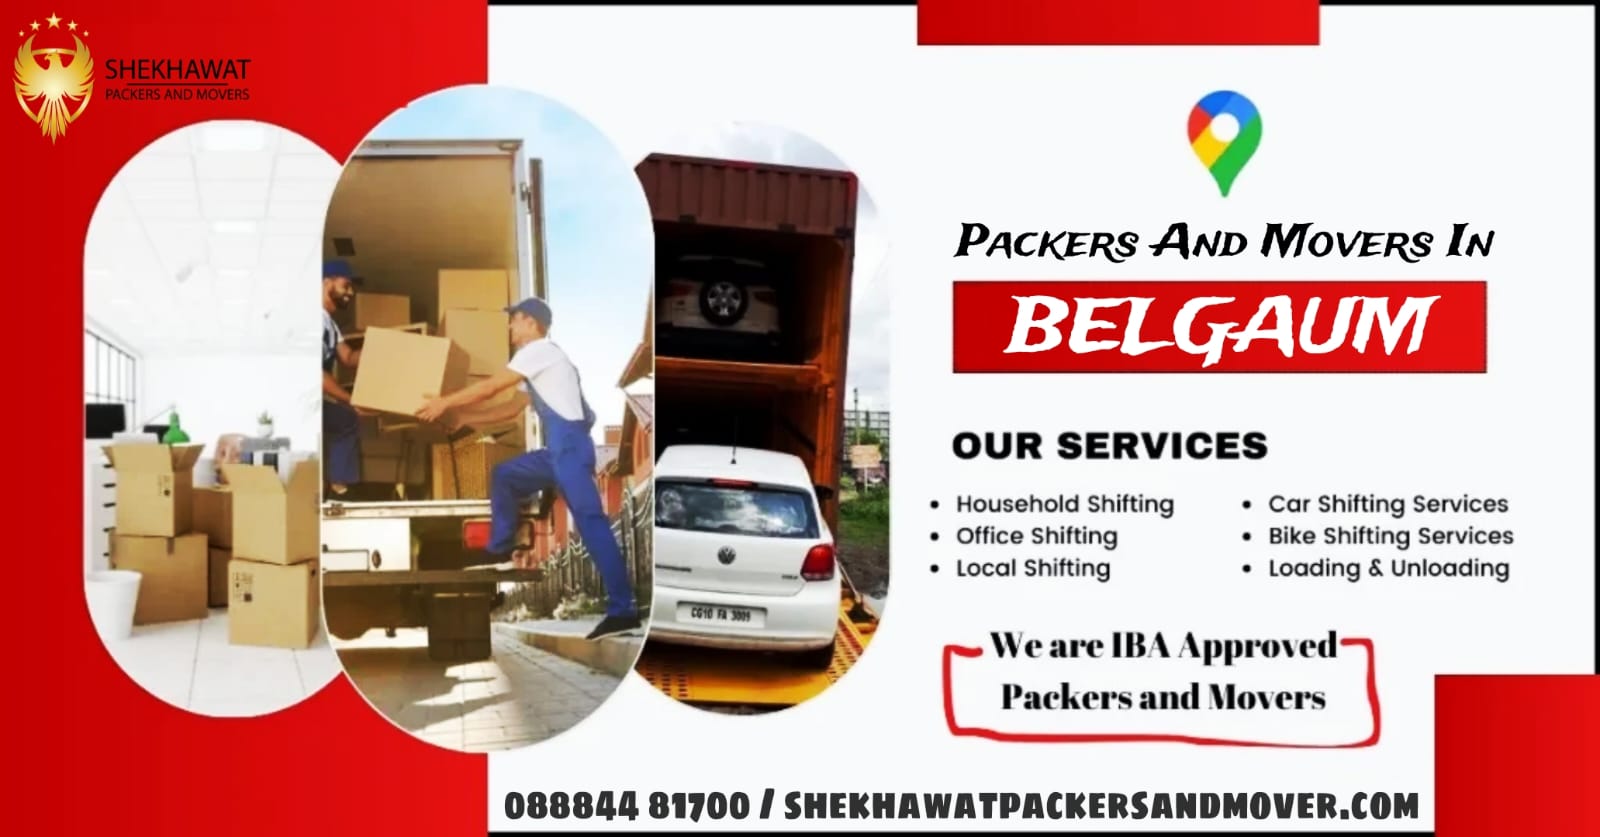 packers and movers in belgaum - Shekhawat packers